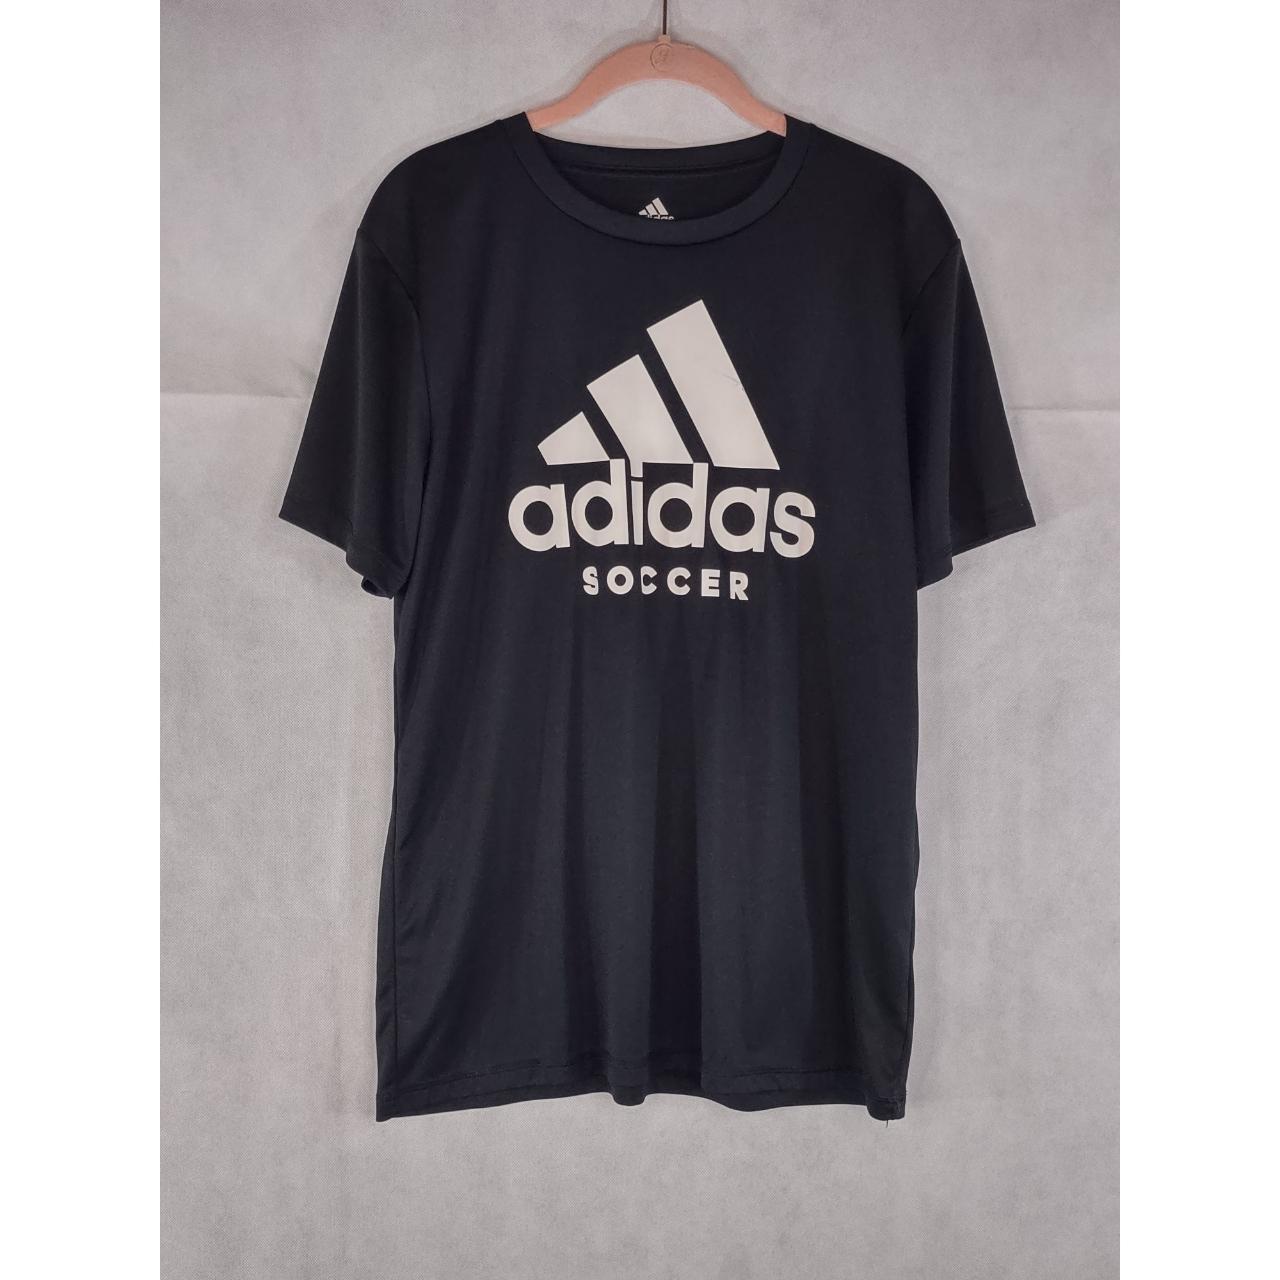 Adidas Black and White T-shirt | Depop